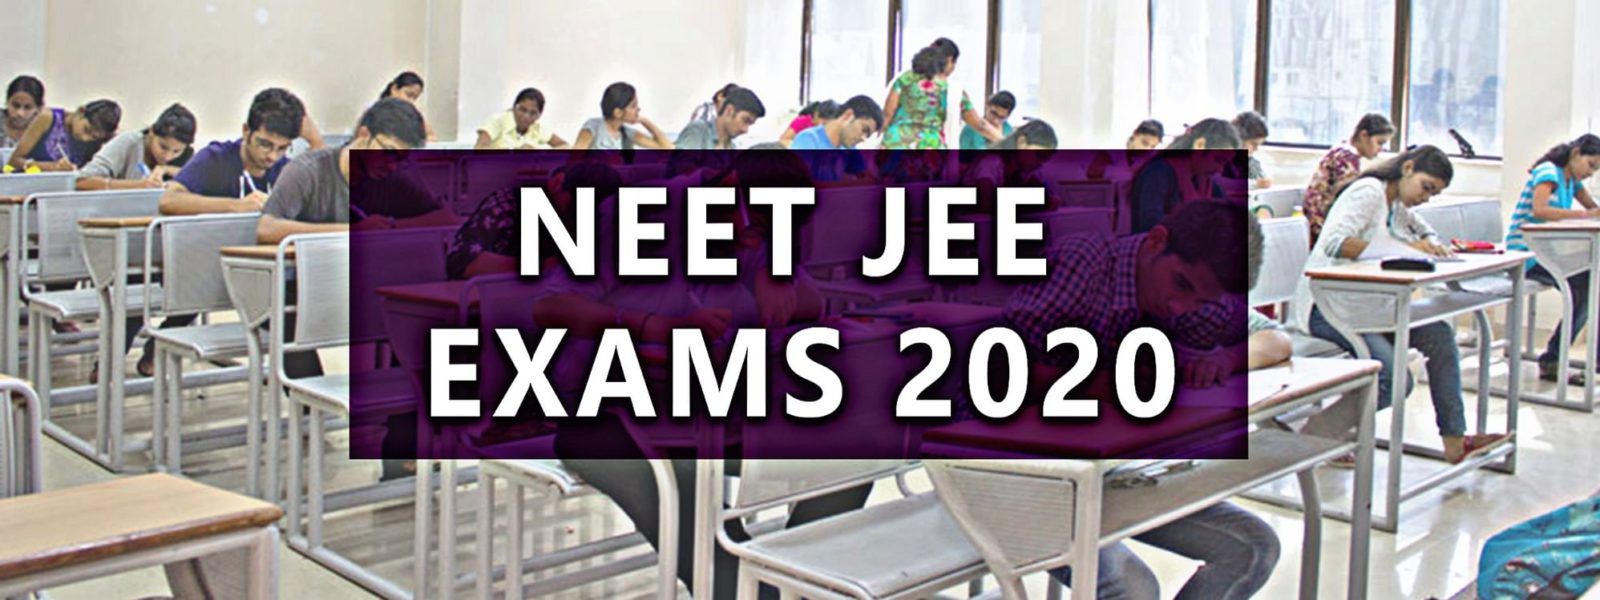 Education ministry secretary says no rethink on postponing JEE and NEET exams